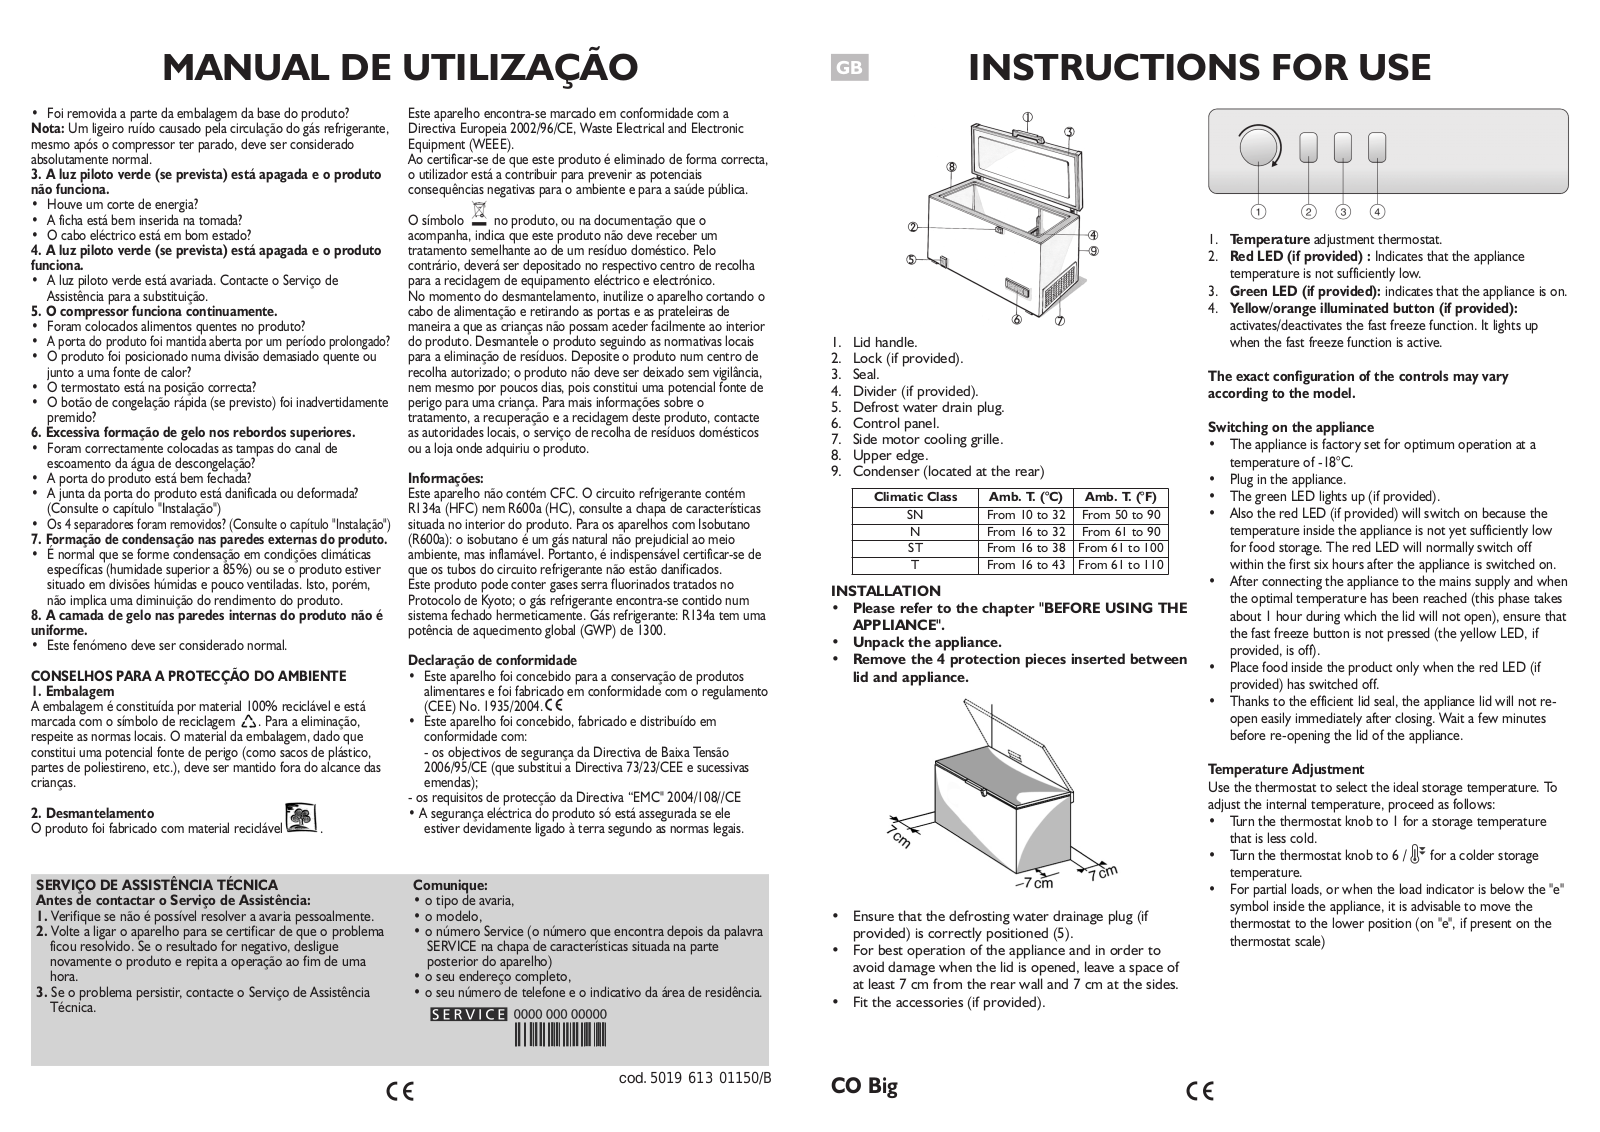 WHIRLPOOL AFG6352 User Manual